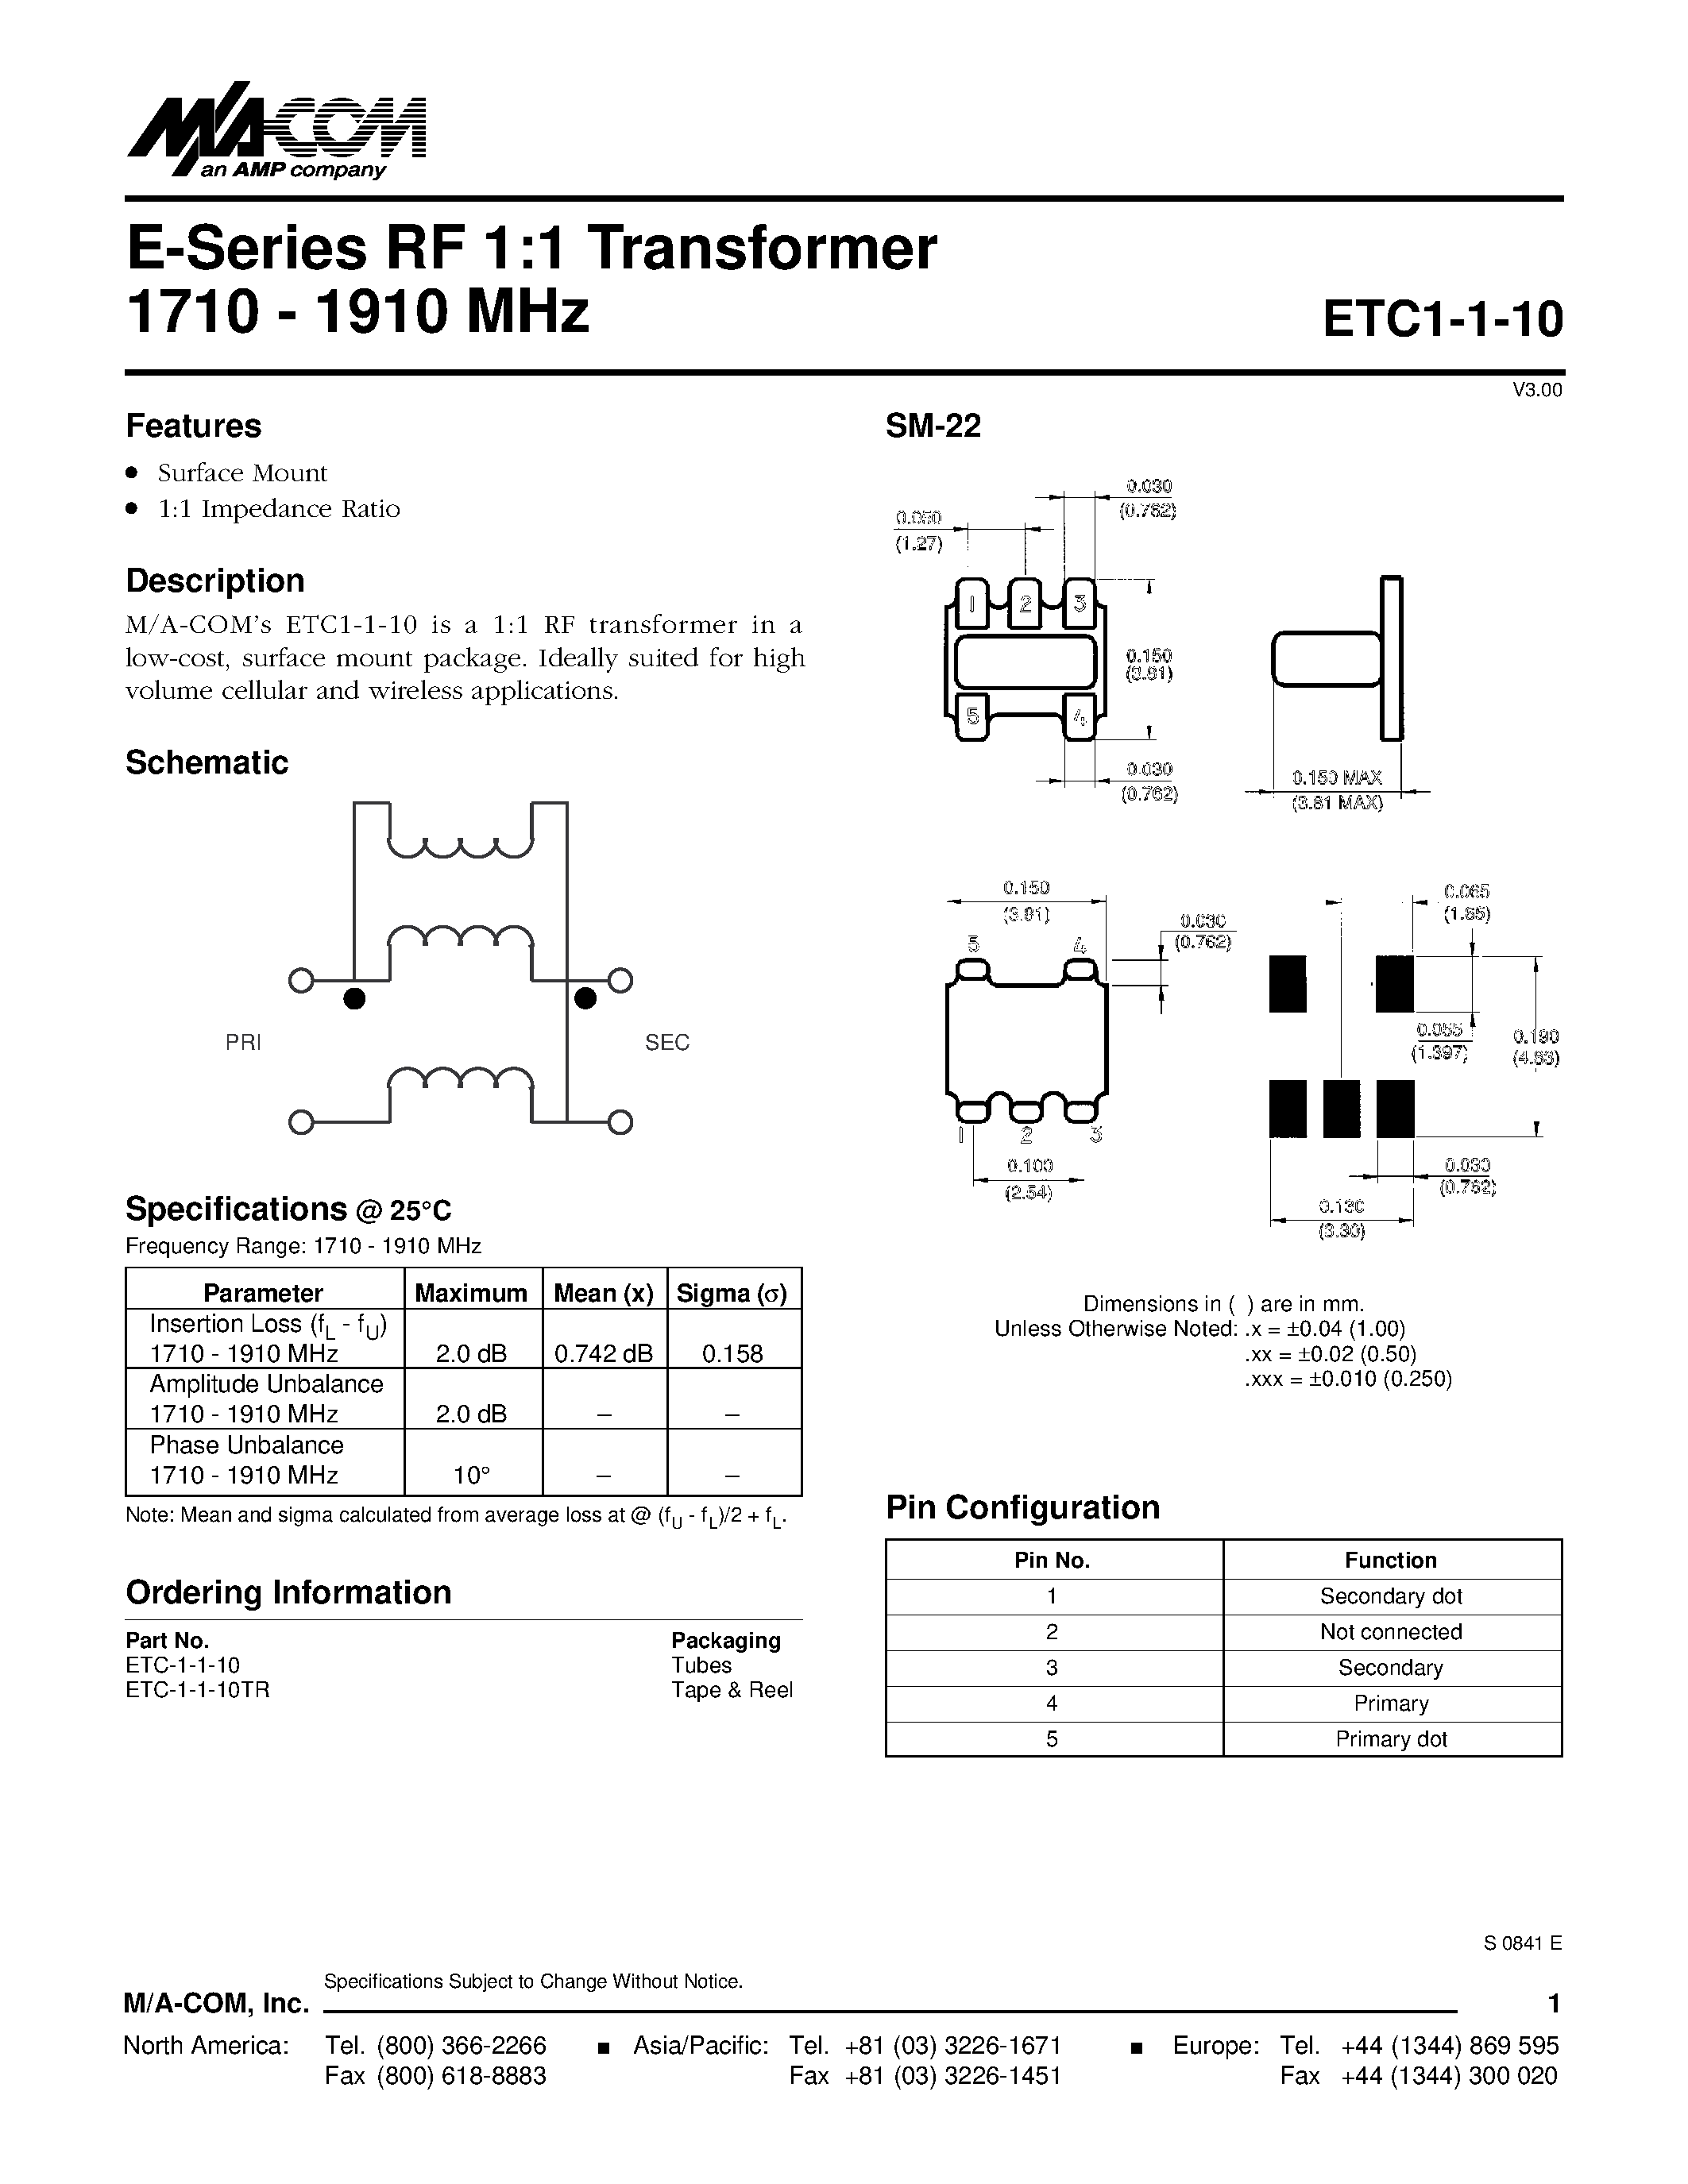 Даташит ETC-1-1-10TR - E-Series RF 1:1 Transformer 1710 - 1910 MHz страница 1